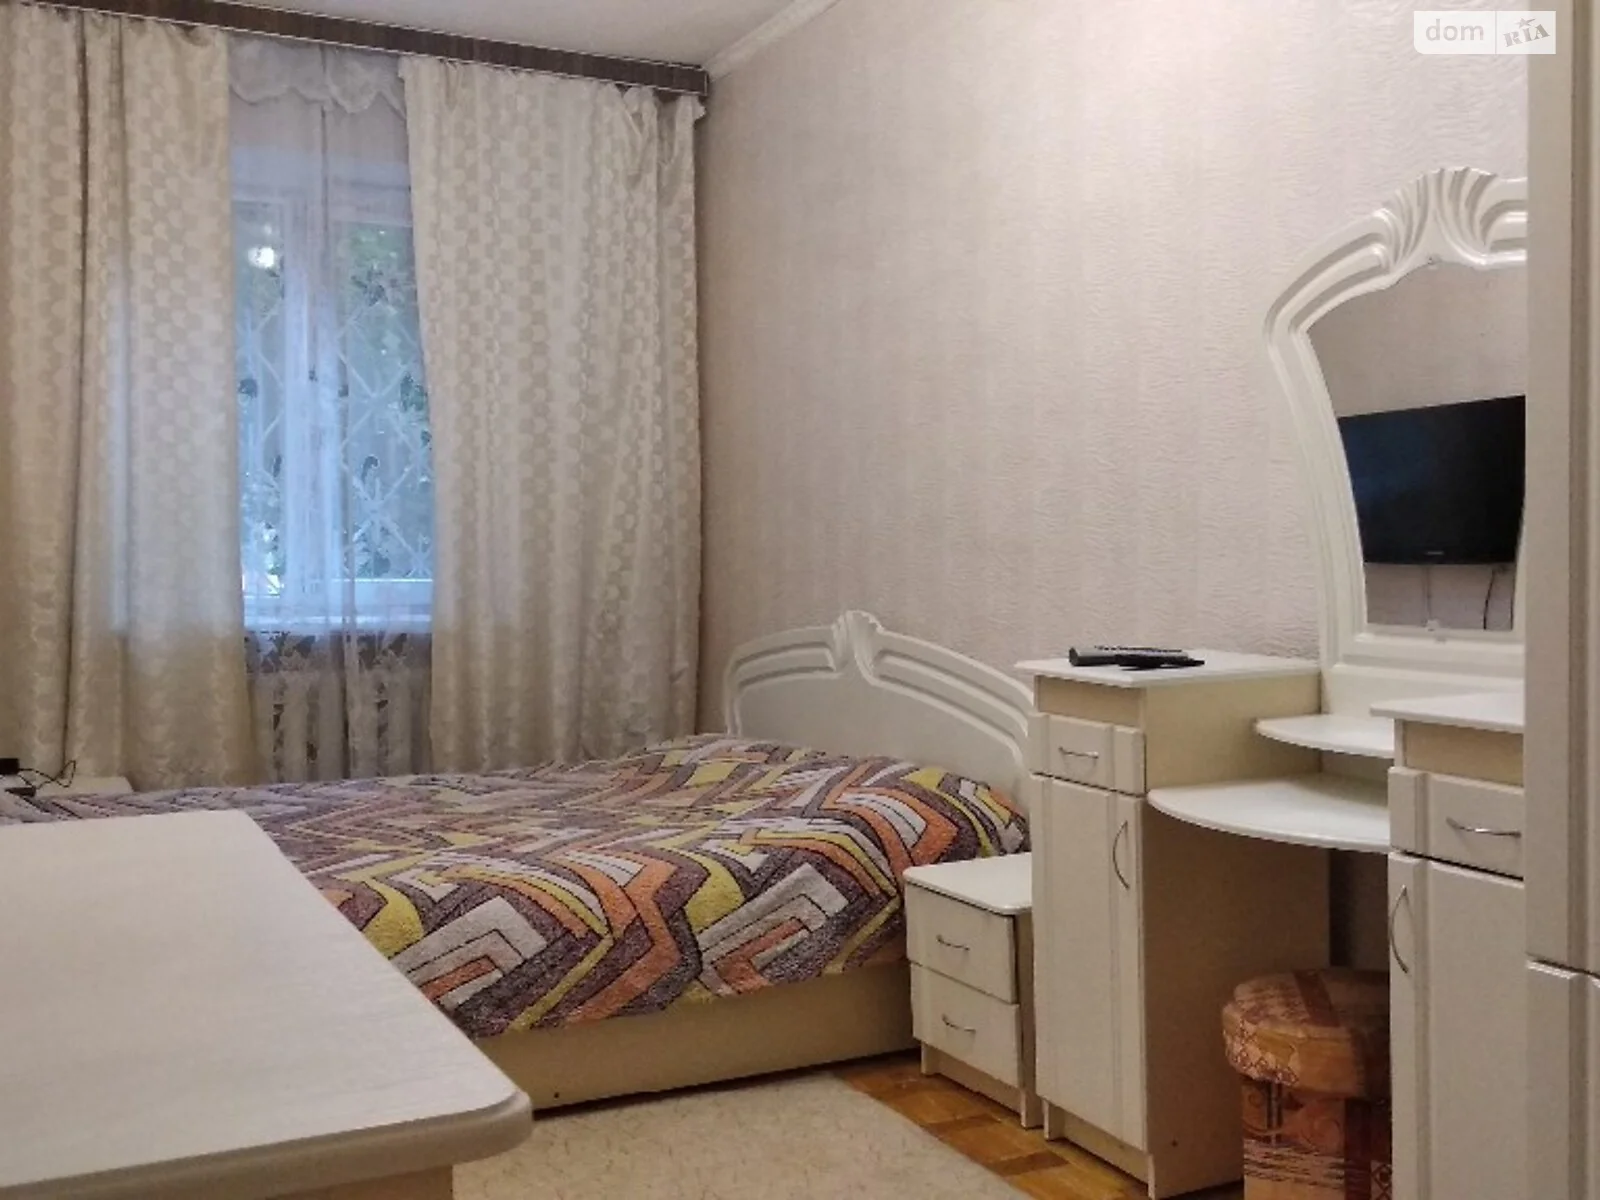 Сдается в аренду 2-комнатная квартира в Киеве, ул. Кирилловская, 127А - фото 1